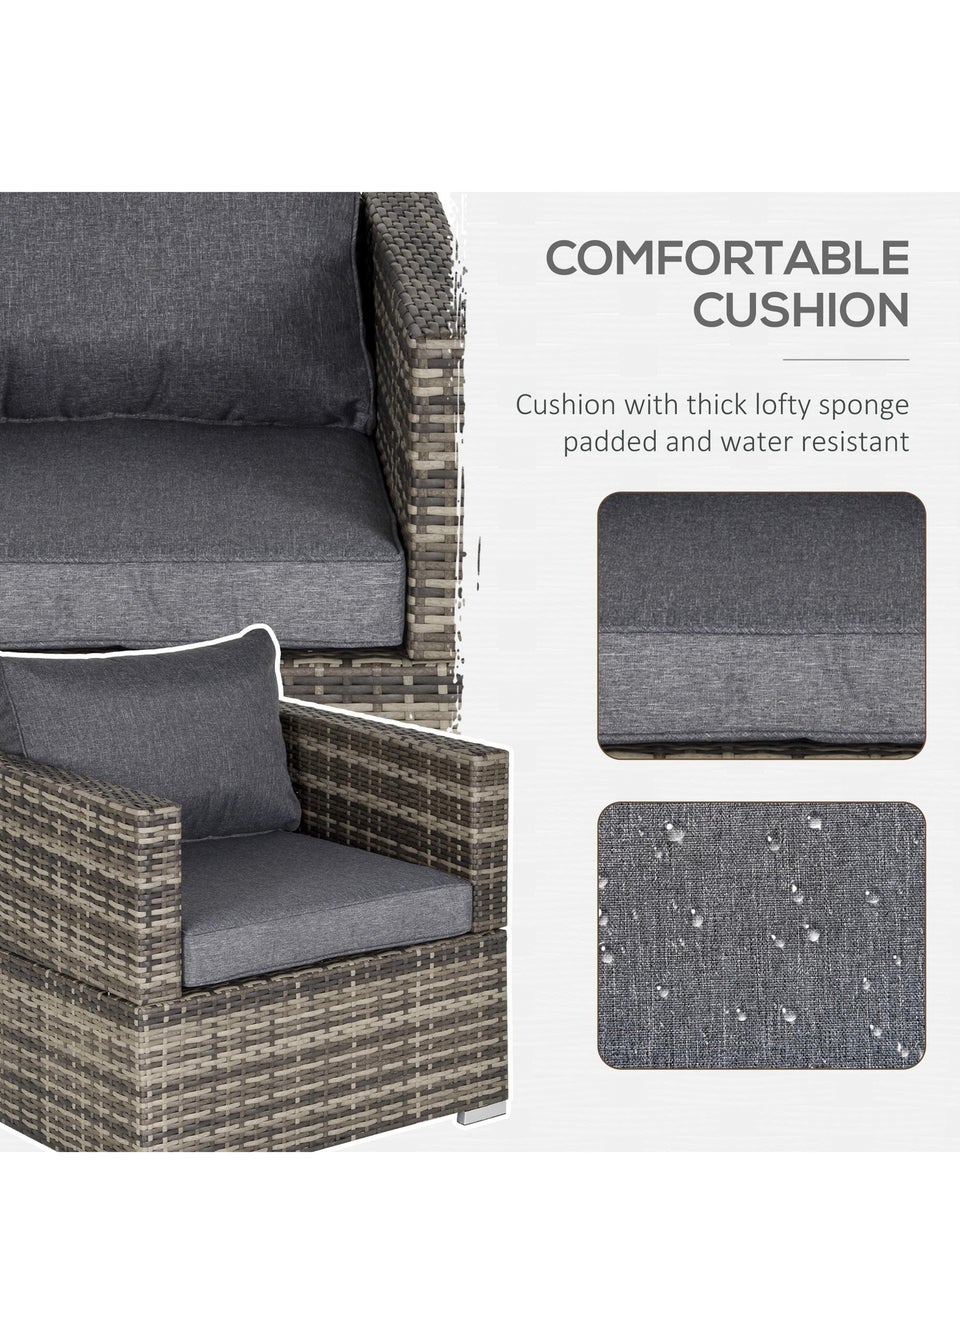 Outsunny Single Seater Rattan Chair Sofa - Dark Grey